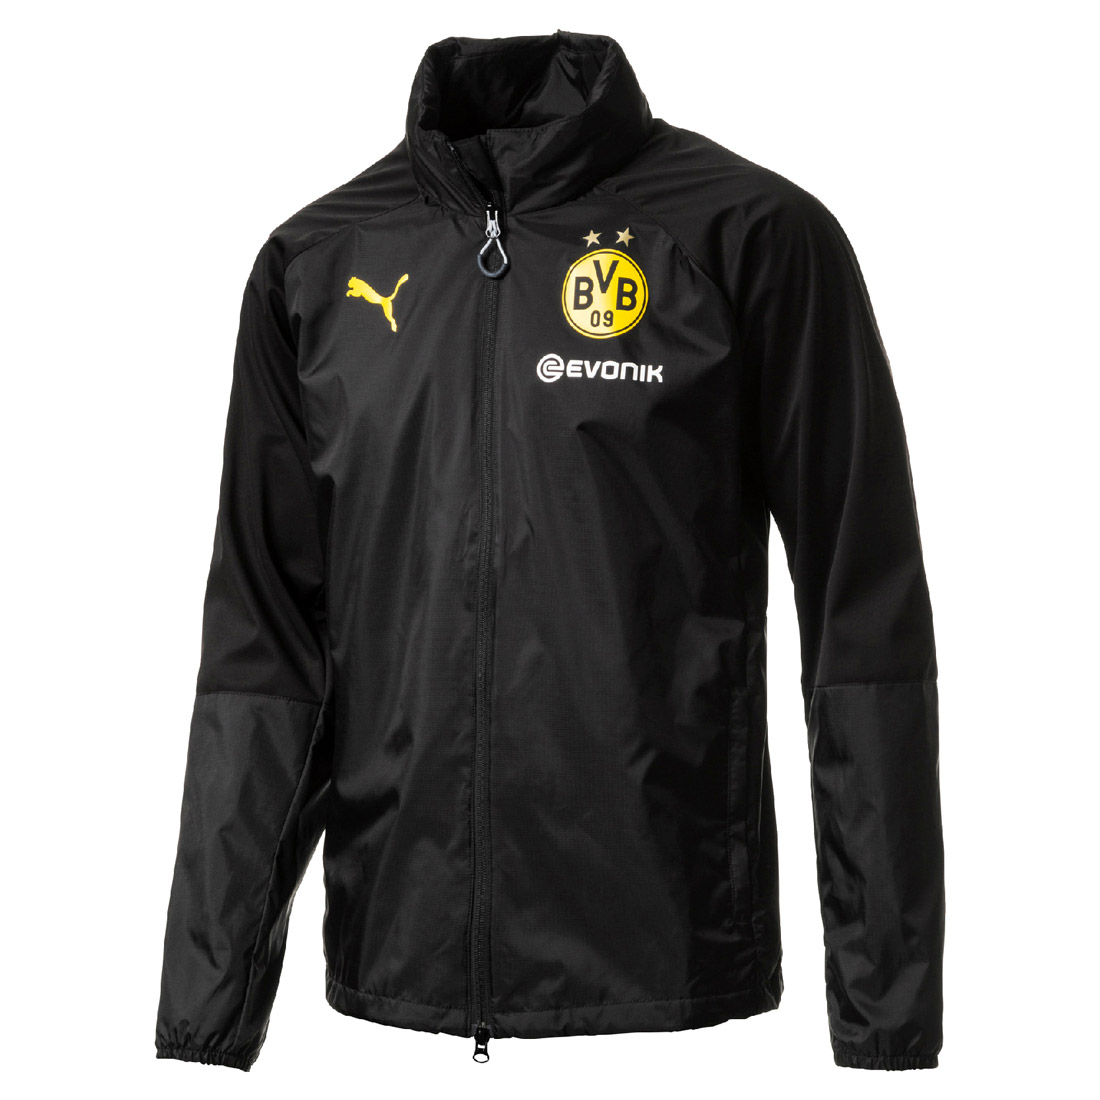 Puma BVB Rain Top Jacket with Sponsor Herren Regenjacke Borussia Dortmund Evonik